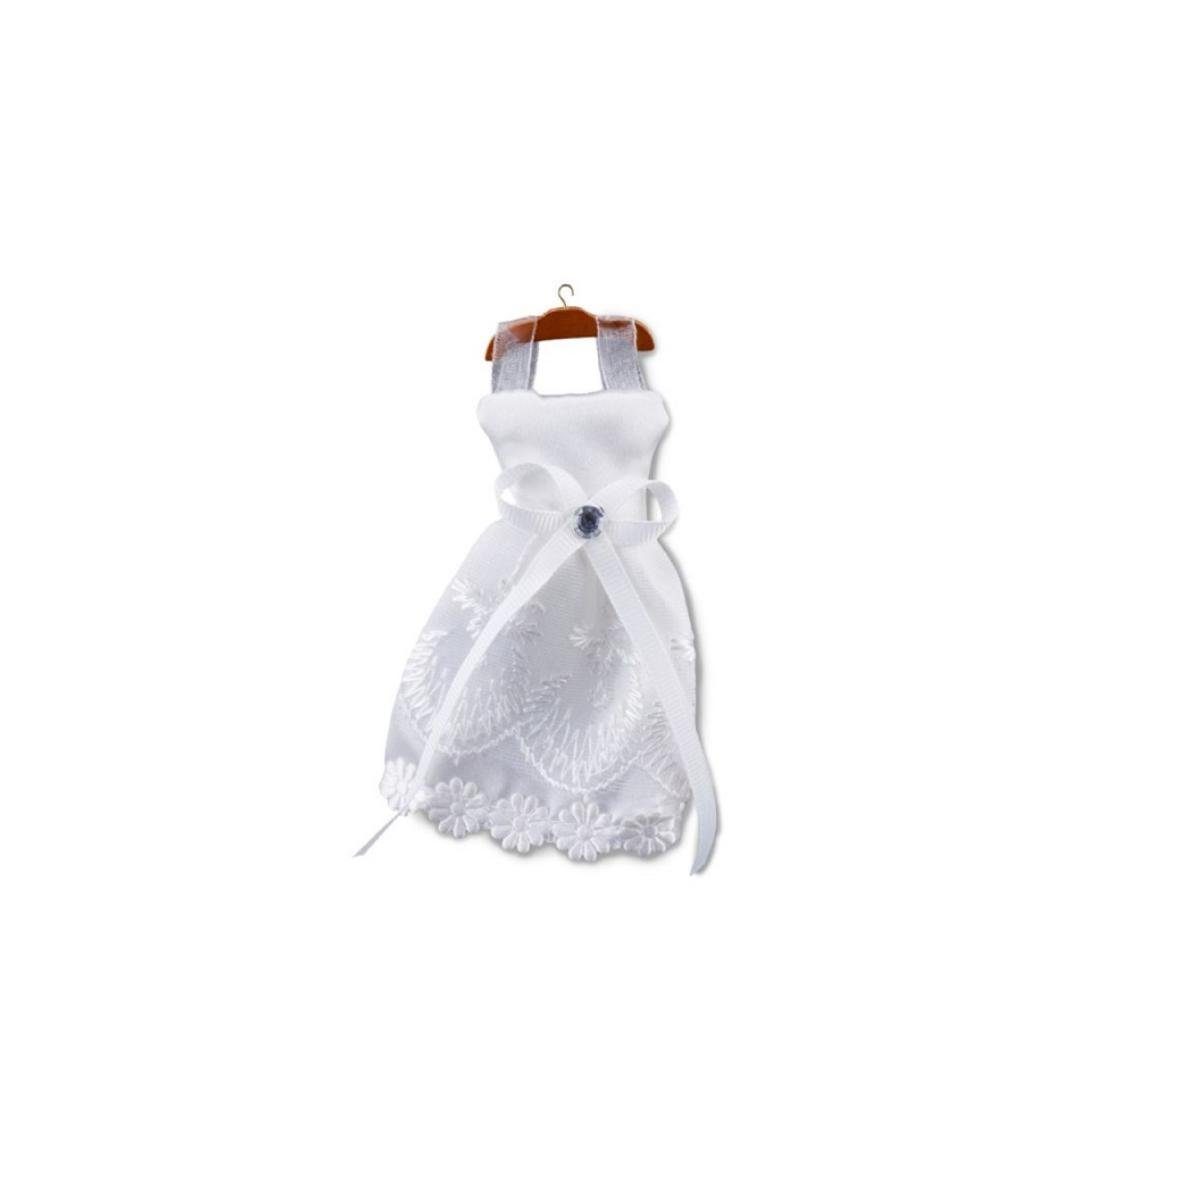 Reutter Porzellan Dekofigur 001.736/0 - Hochzeitskleid, Miniatur